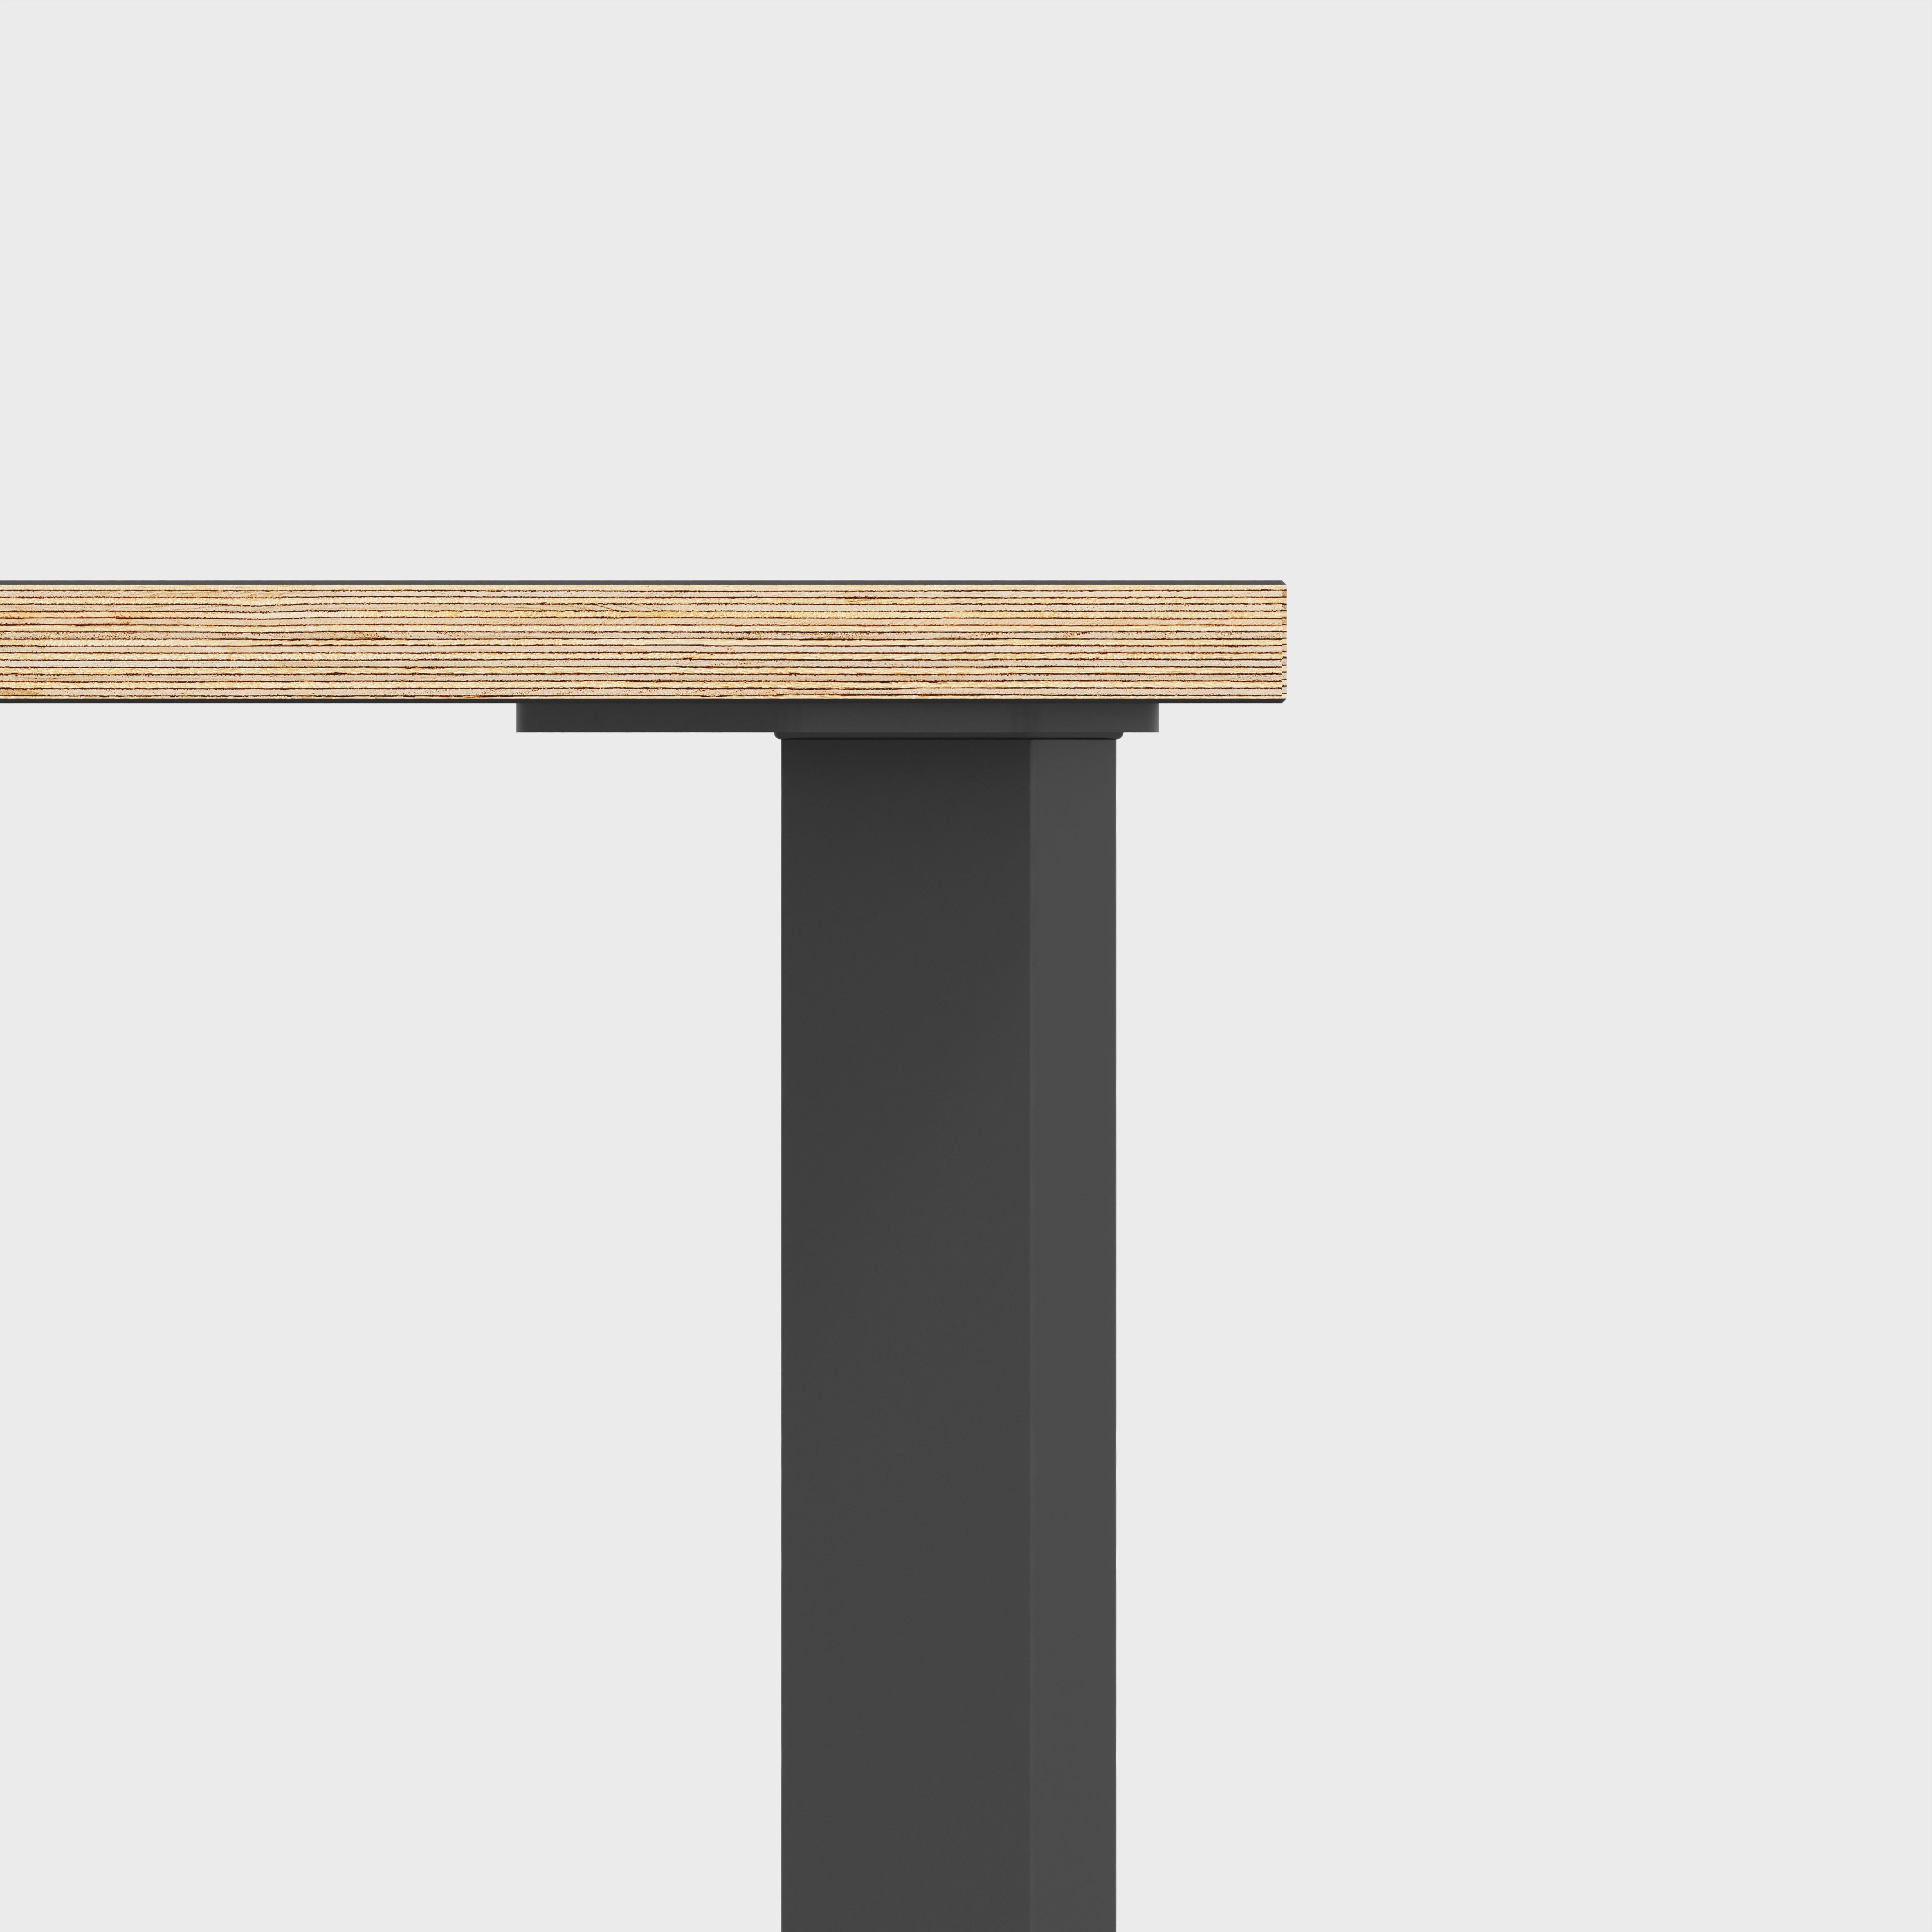 Desk with Black Rectangular Single Pin Legs - Formica Chrome Yellow - 1200(w) x 600(d) x 735(h)